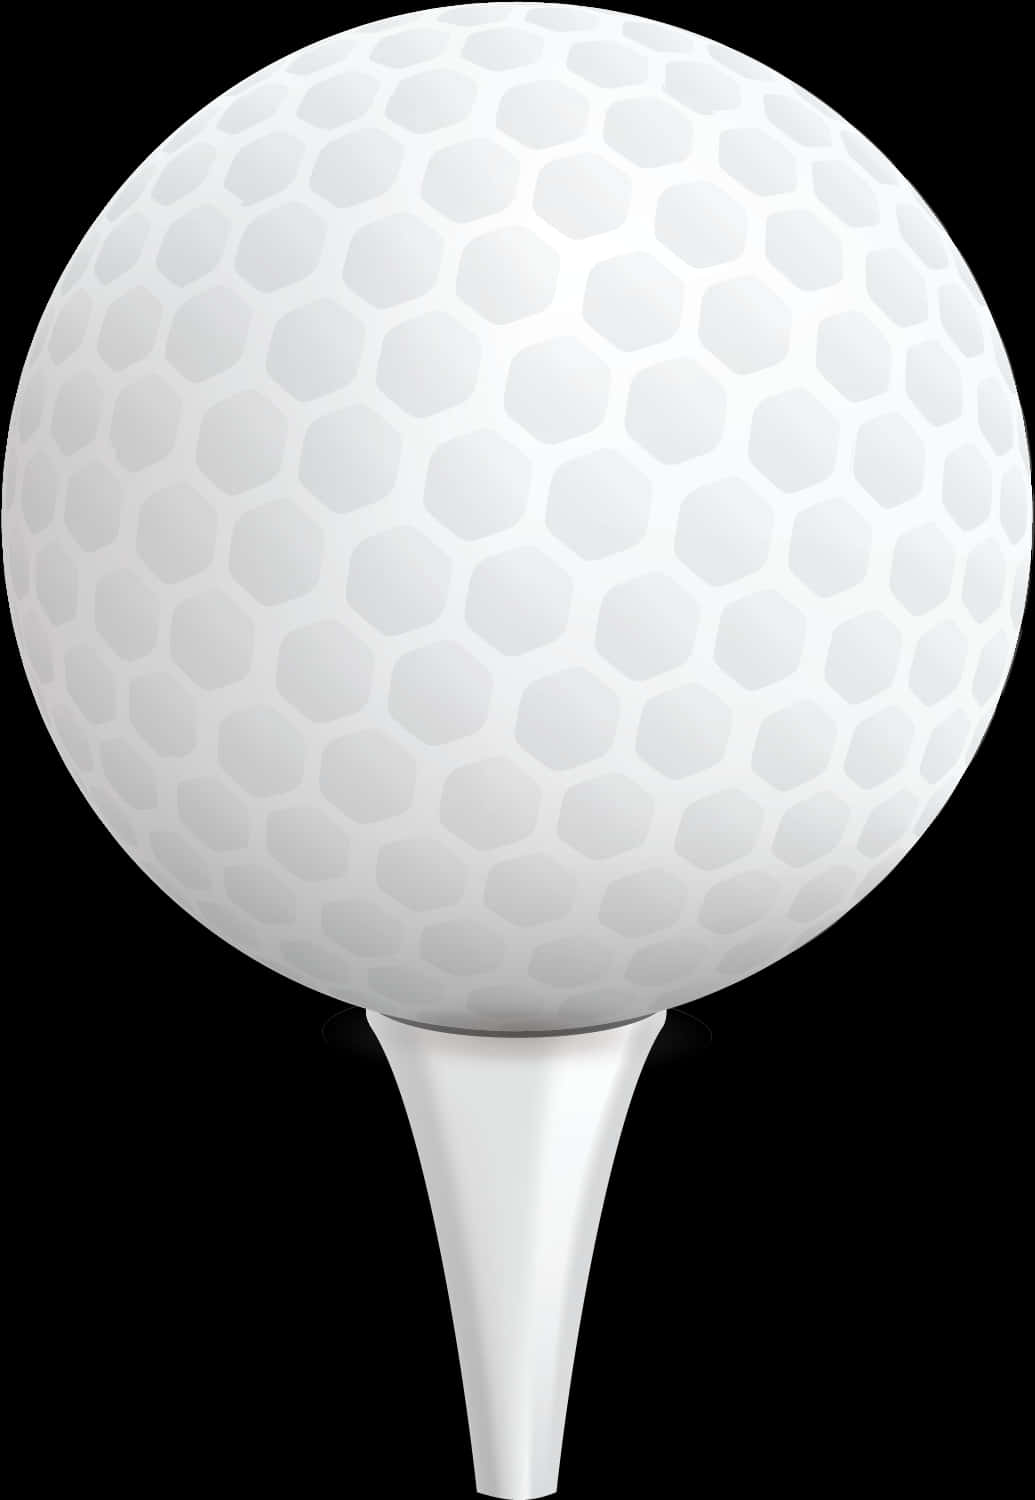 Golf Ball On White Tee